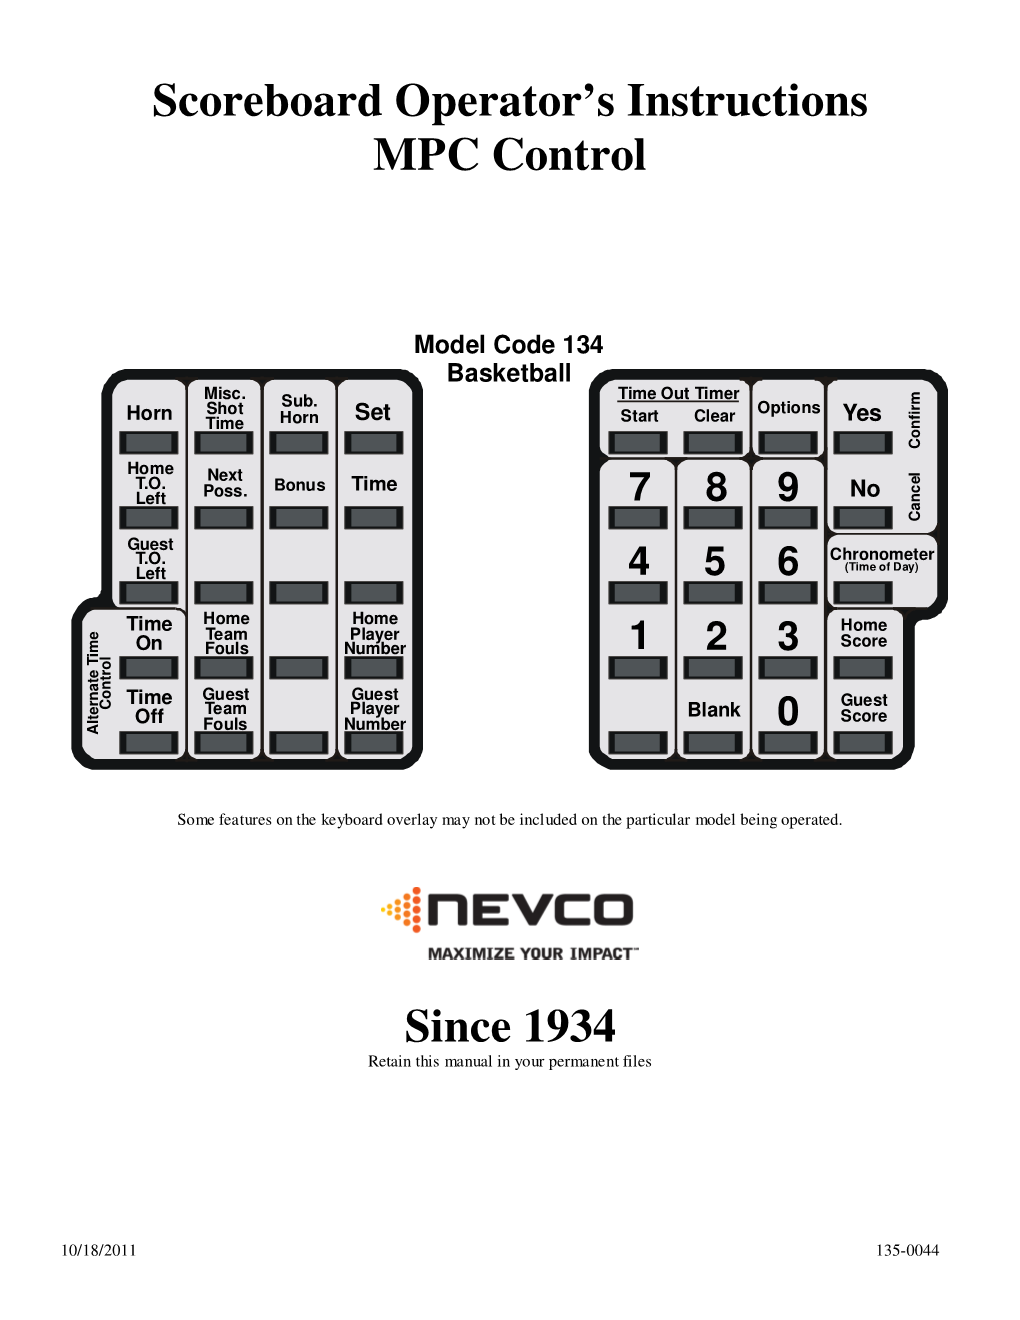 Scoreboard Operator's Instructions MPC Control Since 1934